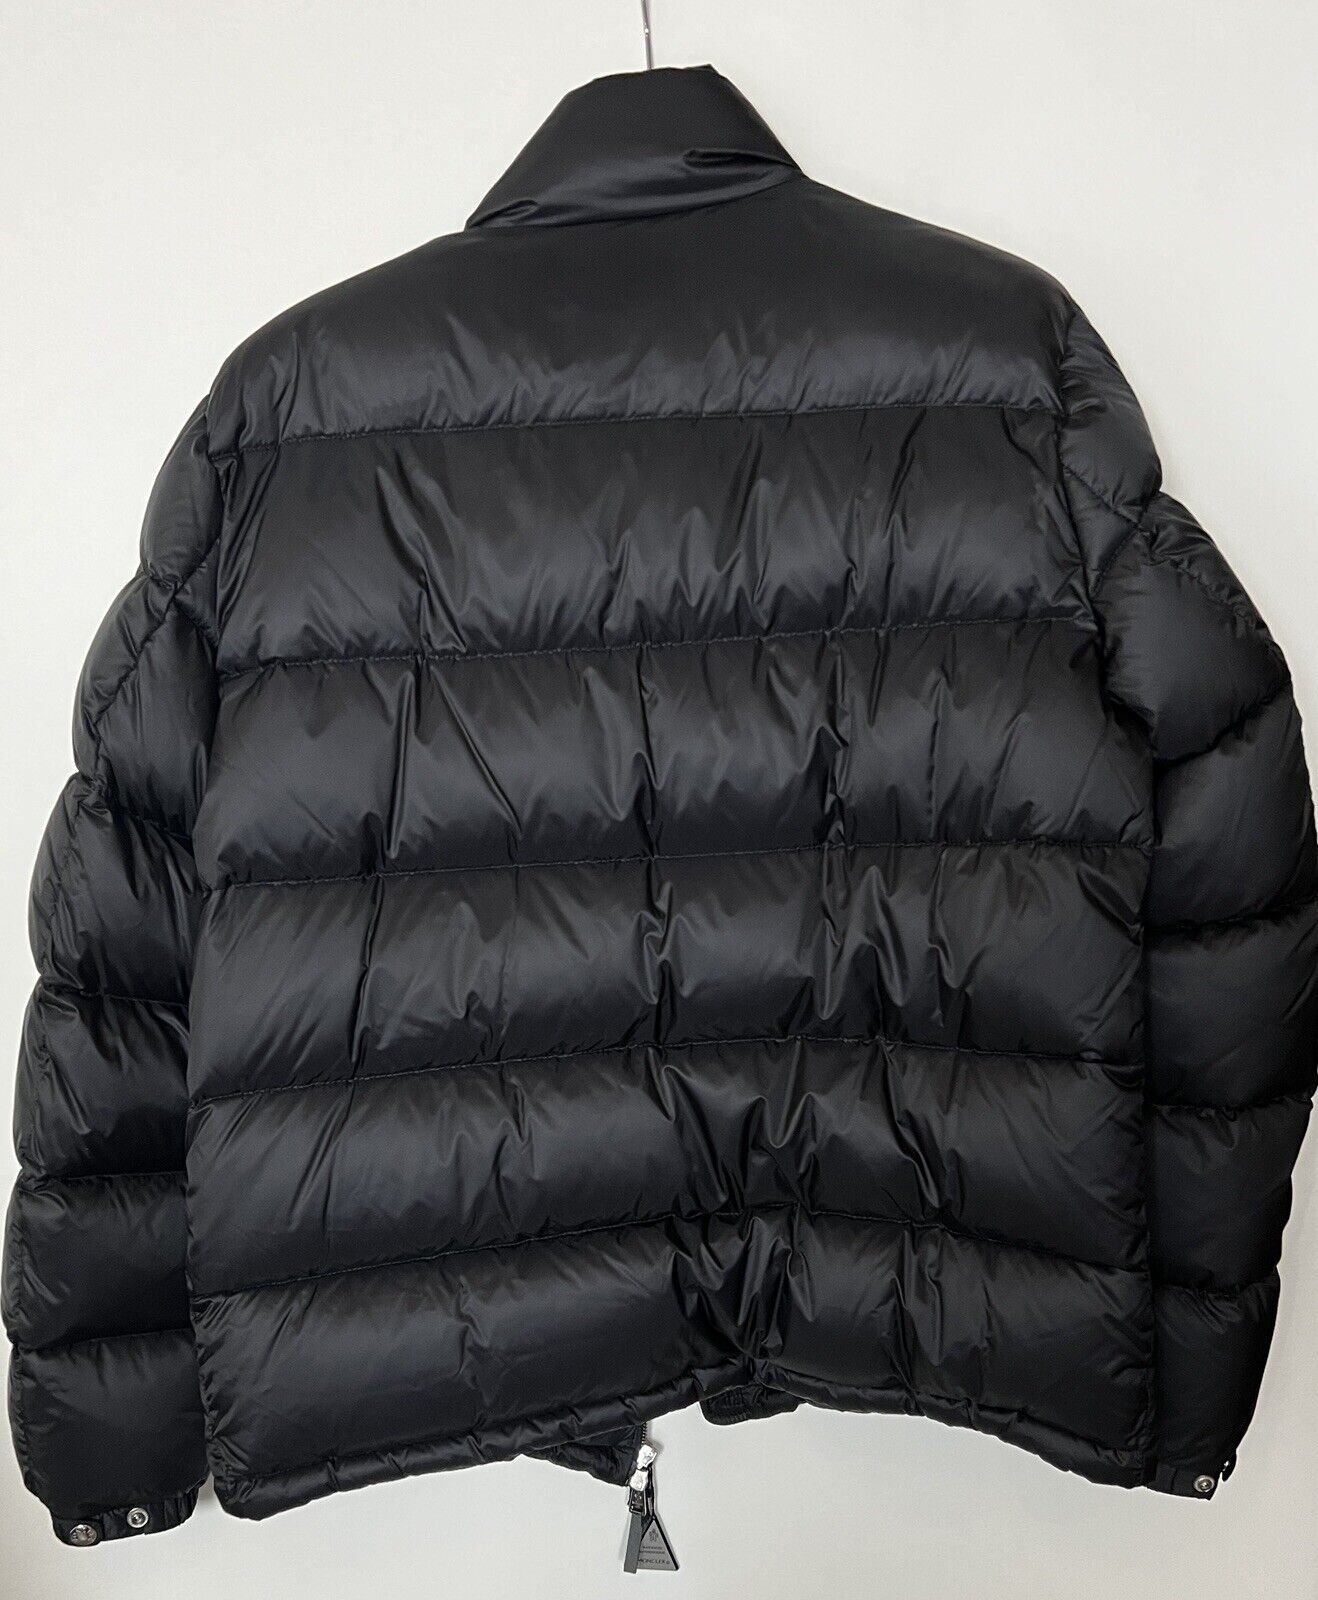 MONCLER Zin Giubbotto Down Jacket Size 4 RETAIL $1350 NAVY